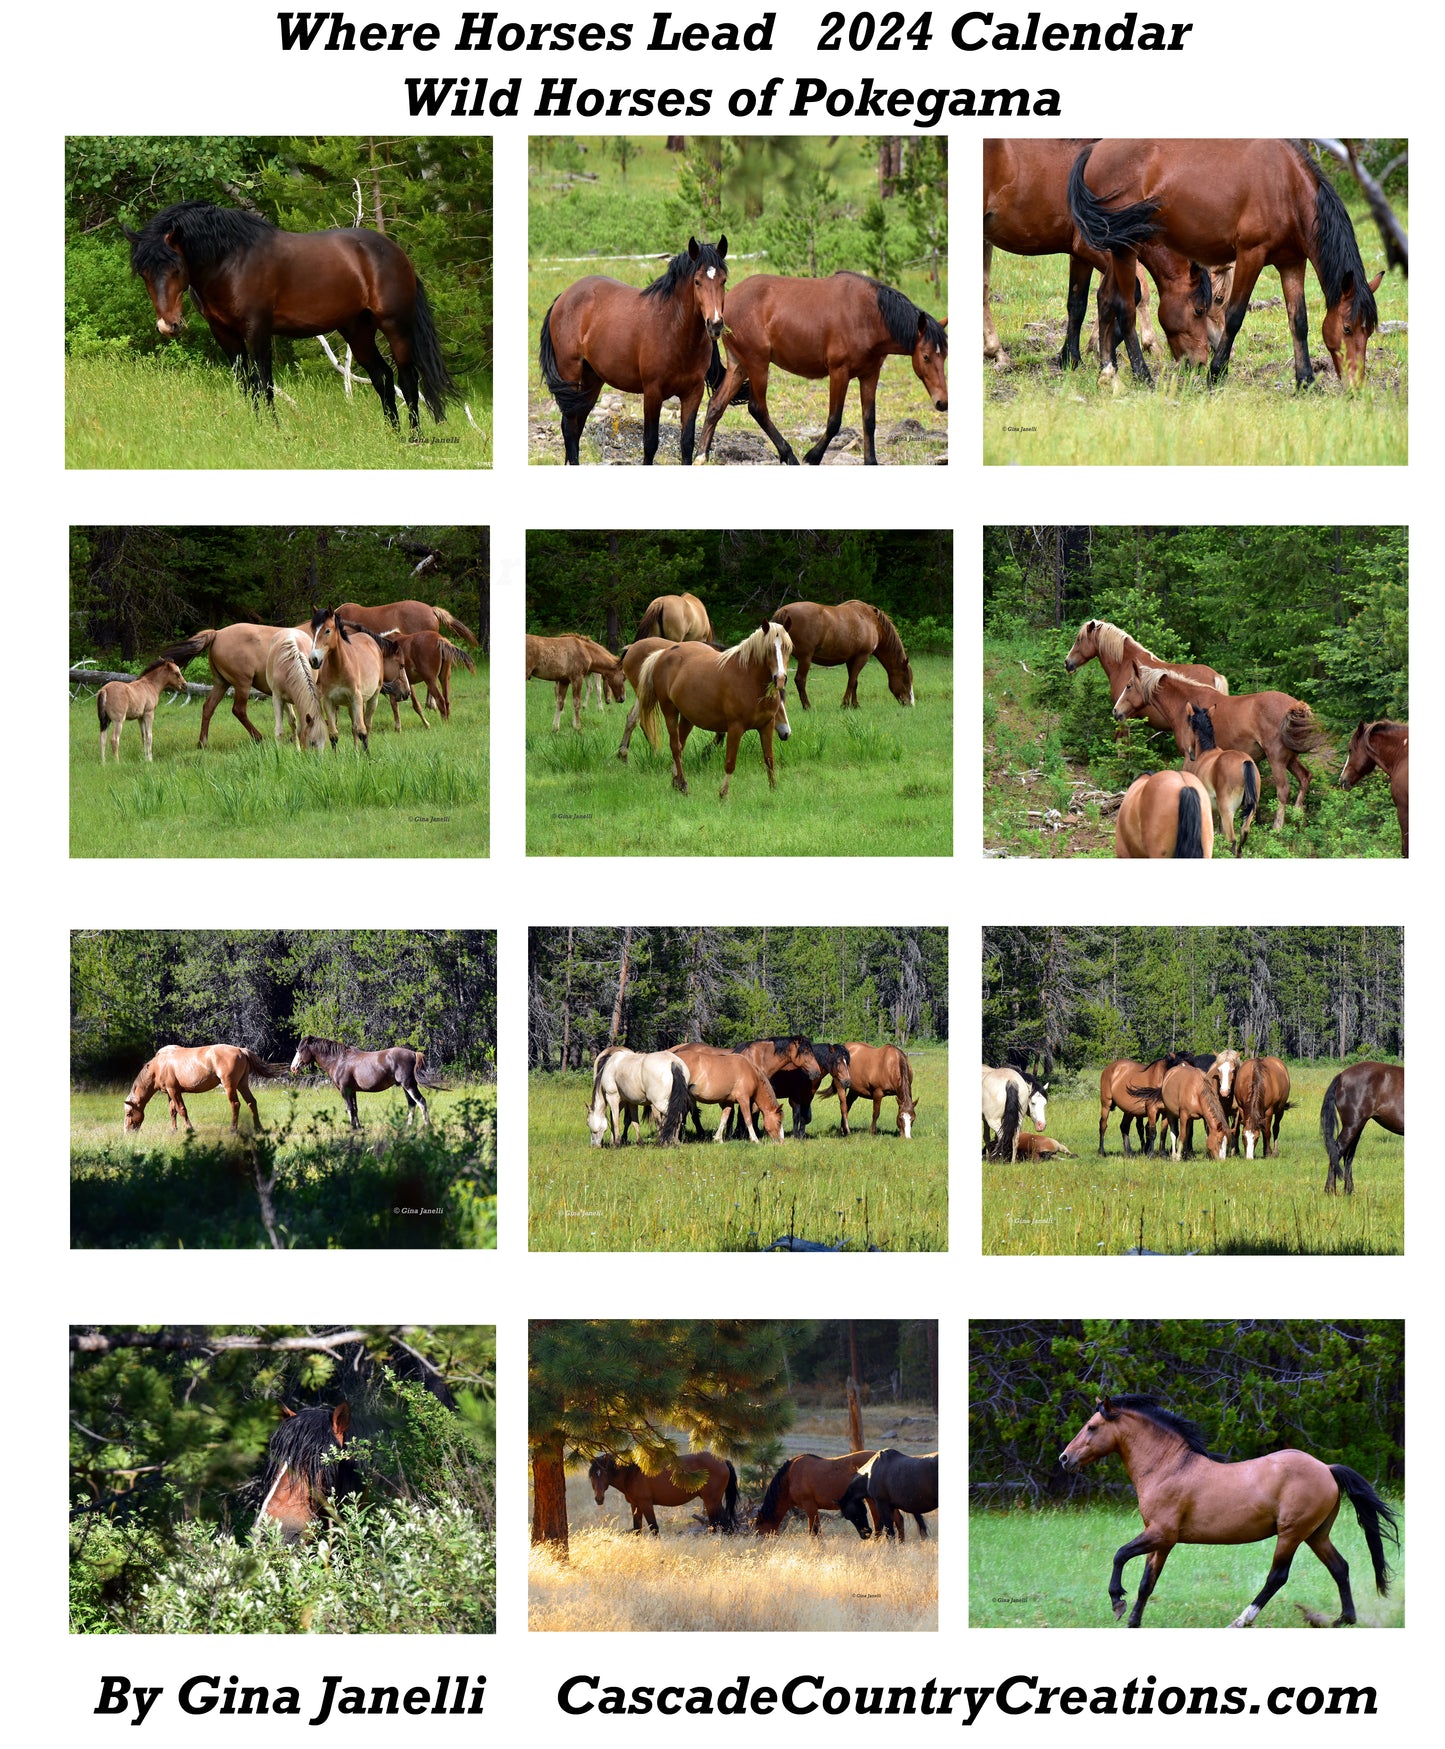 Where Horses Lead - Wild Horses of Pokegama